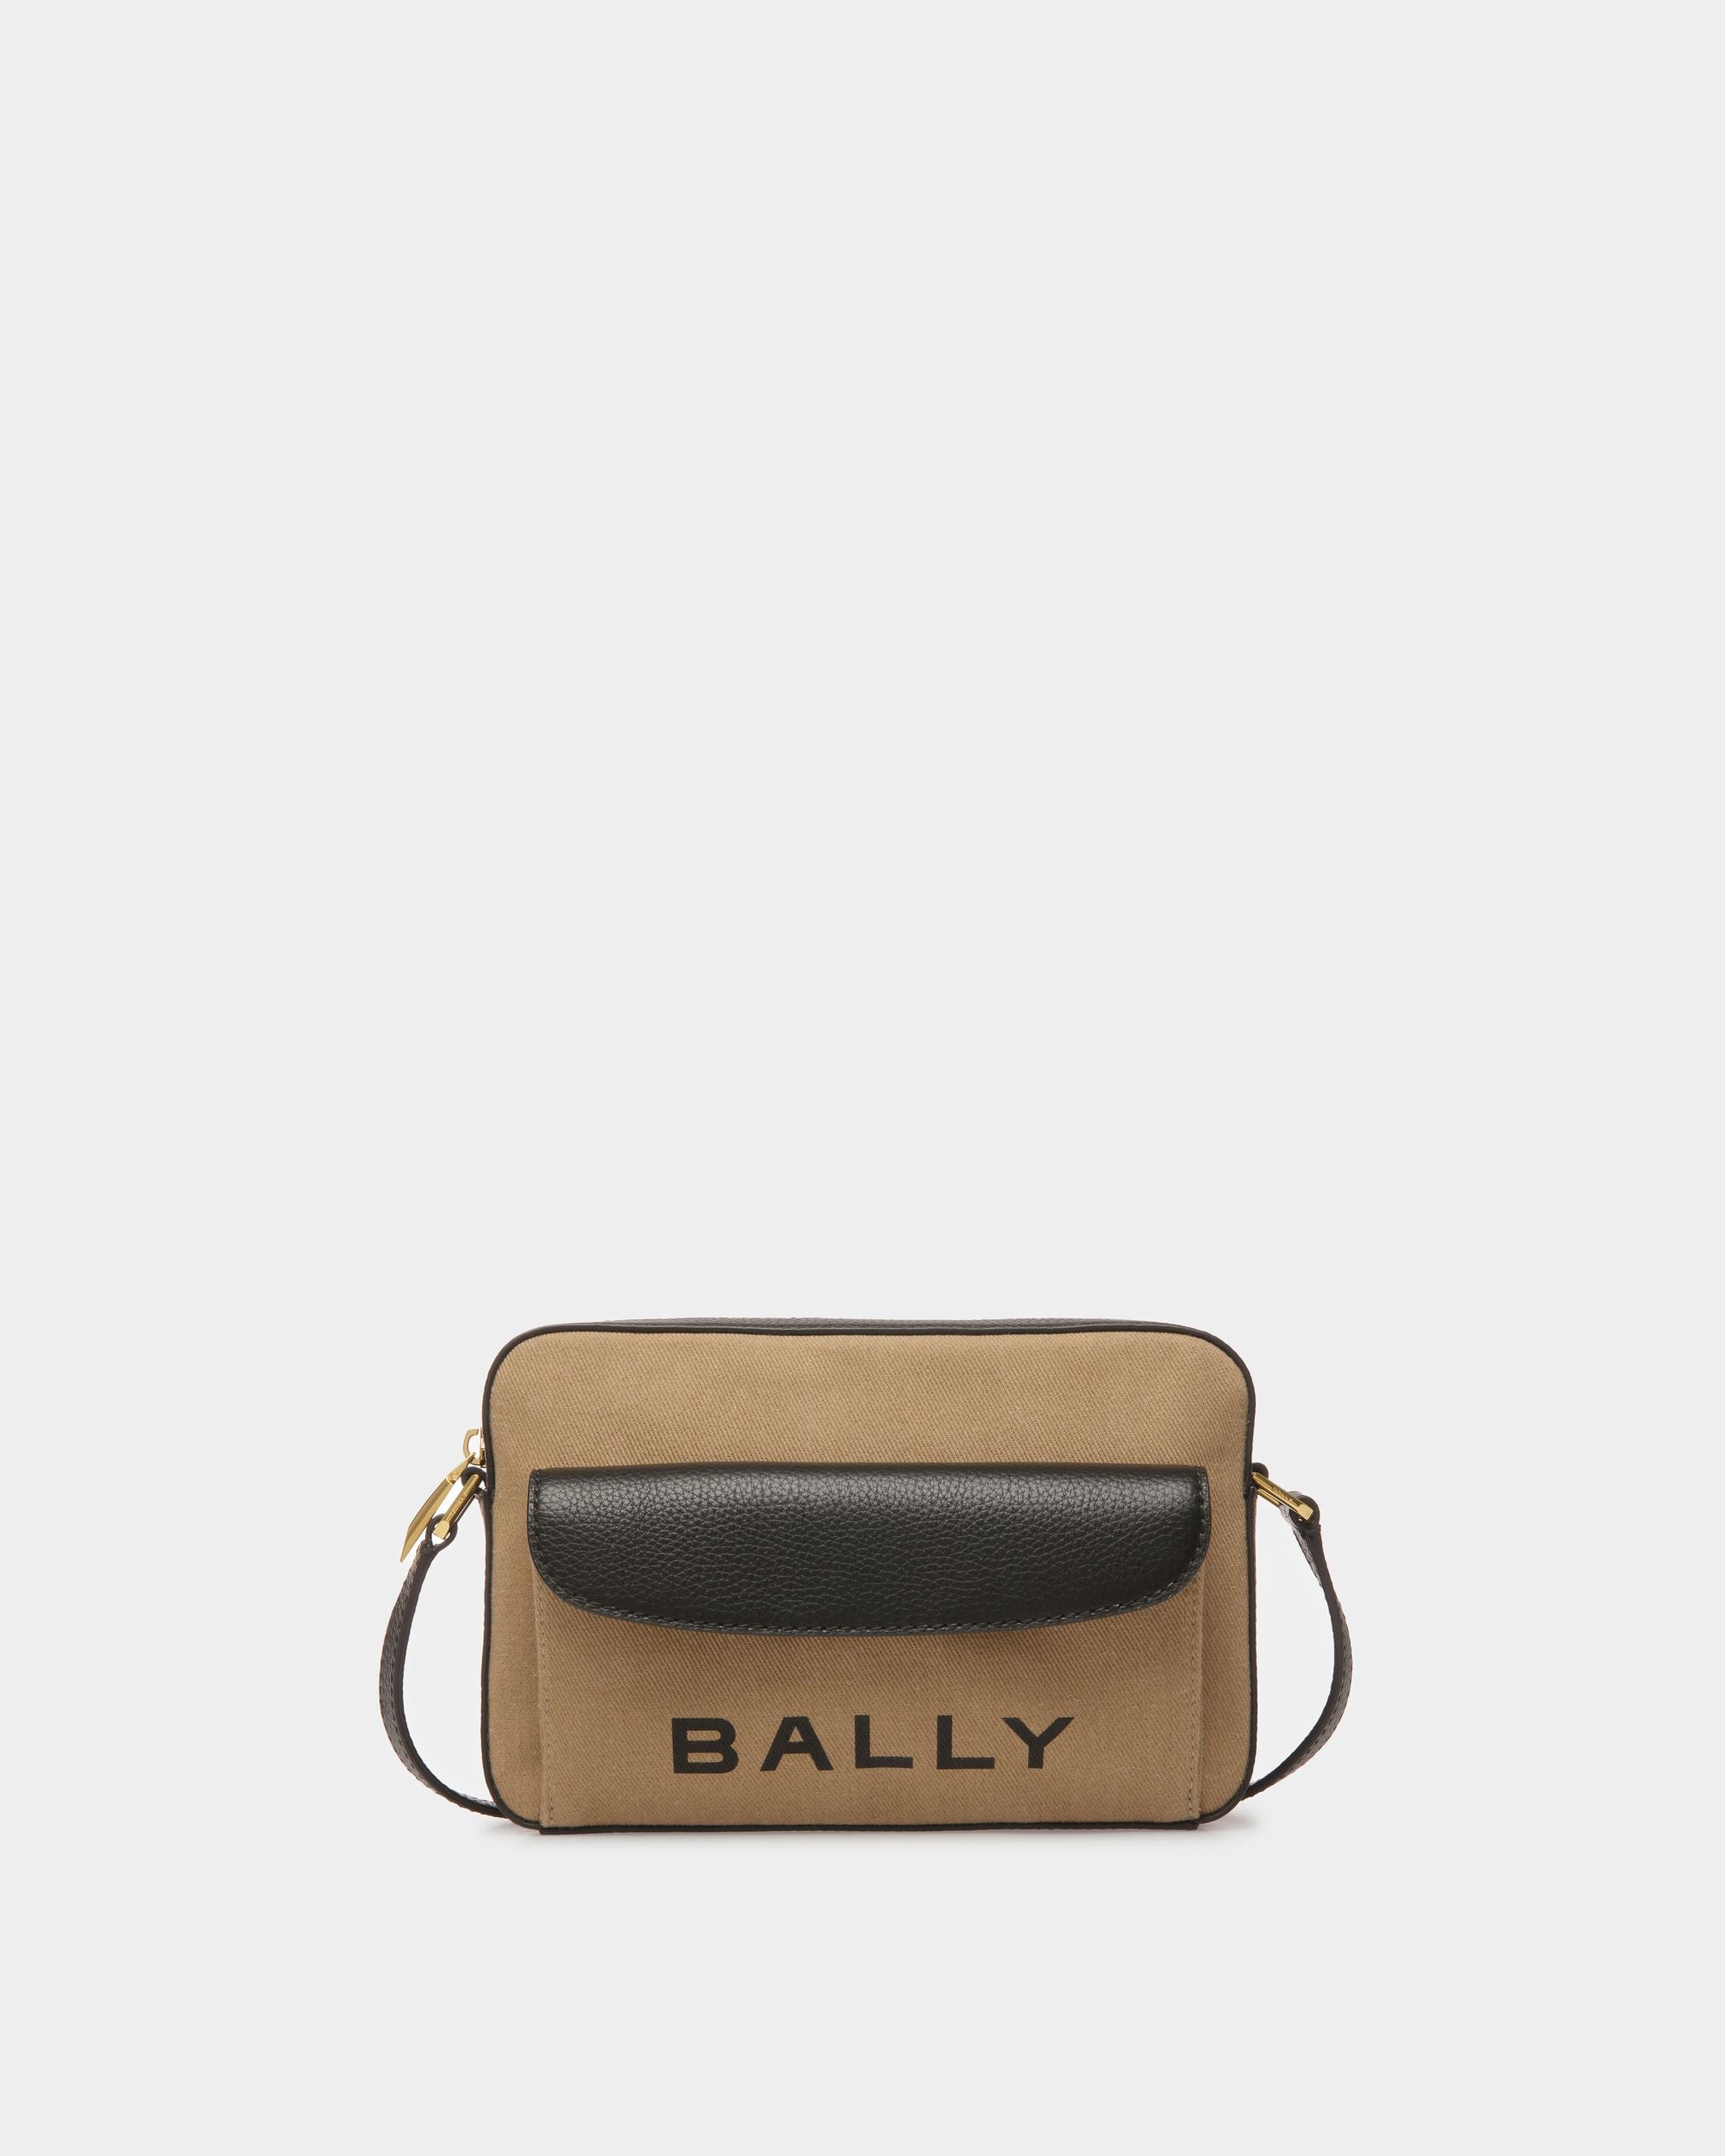 Bar Daniel | Women's Crossbody Bag | Sand And Black Fabric | Bally | Still Life Front